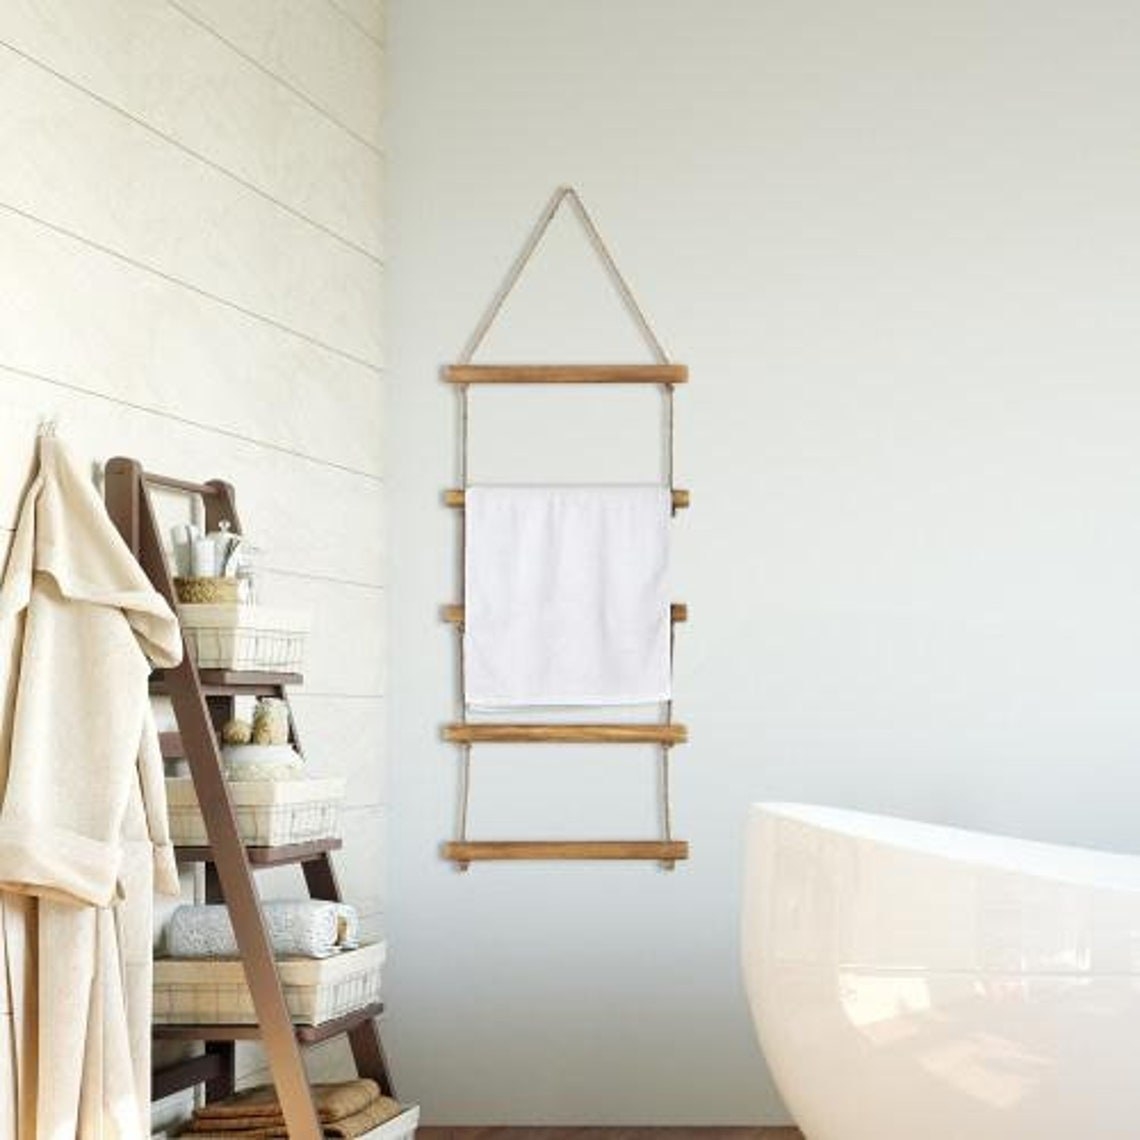 Small Wide Round End Black Towel Ring Modern Hand Towel Hook Wall Hanging  Leather Strap Loop Hanger Handtowel Holder Bathroom Holder 